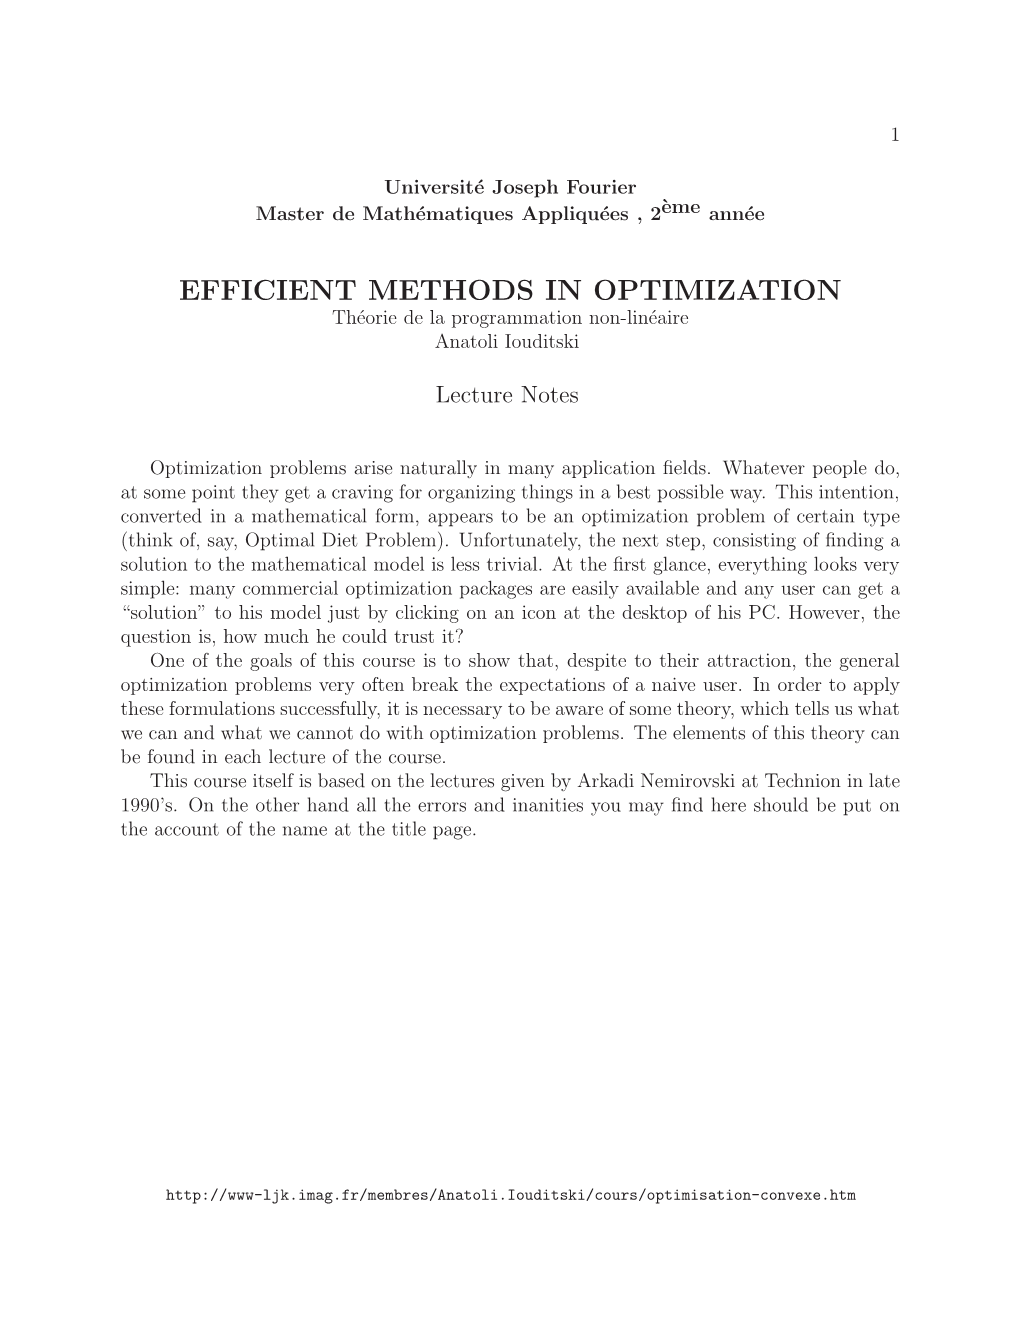 EFFICIENT METHODS in OPTIMIZATION Th´Eorie De La Programmation Non-Lin´Eaire Anatoli Iouditski